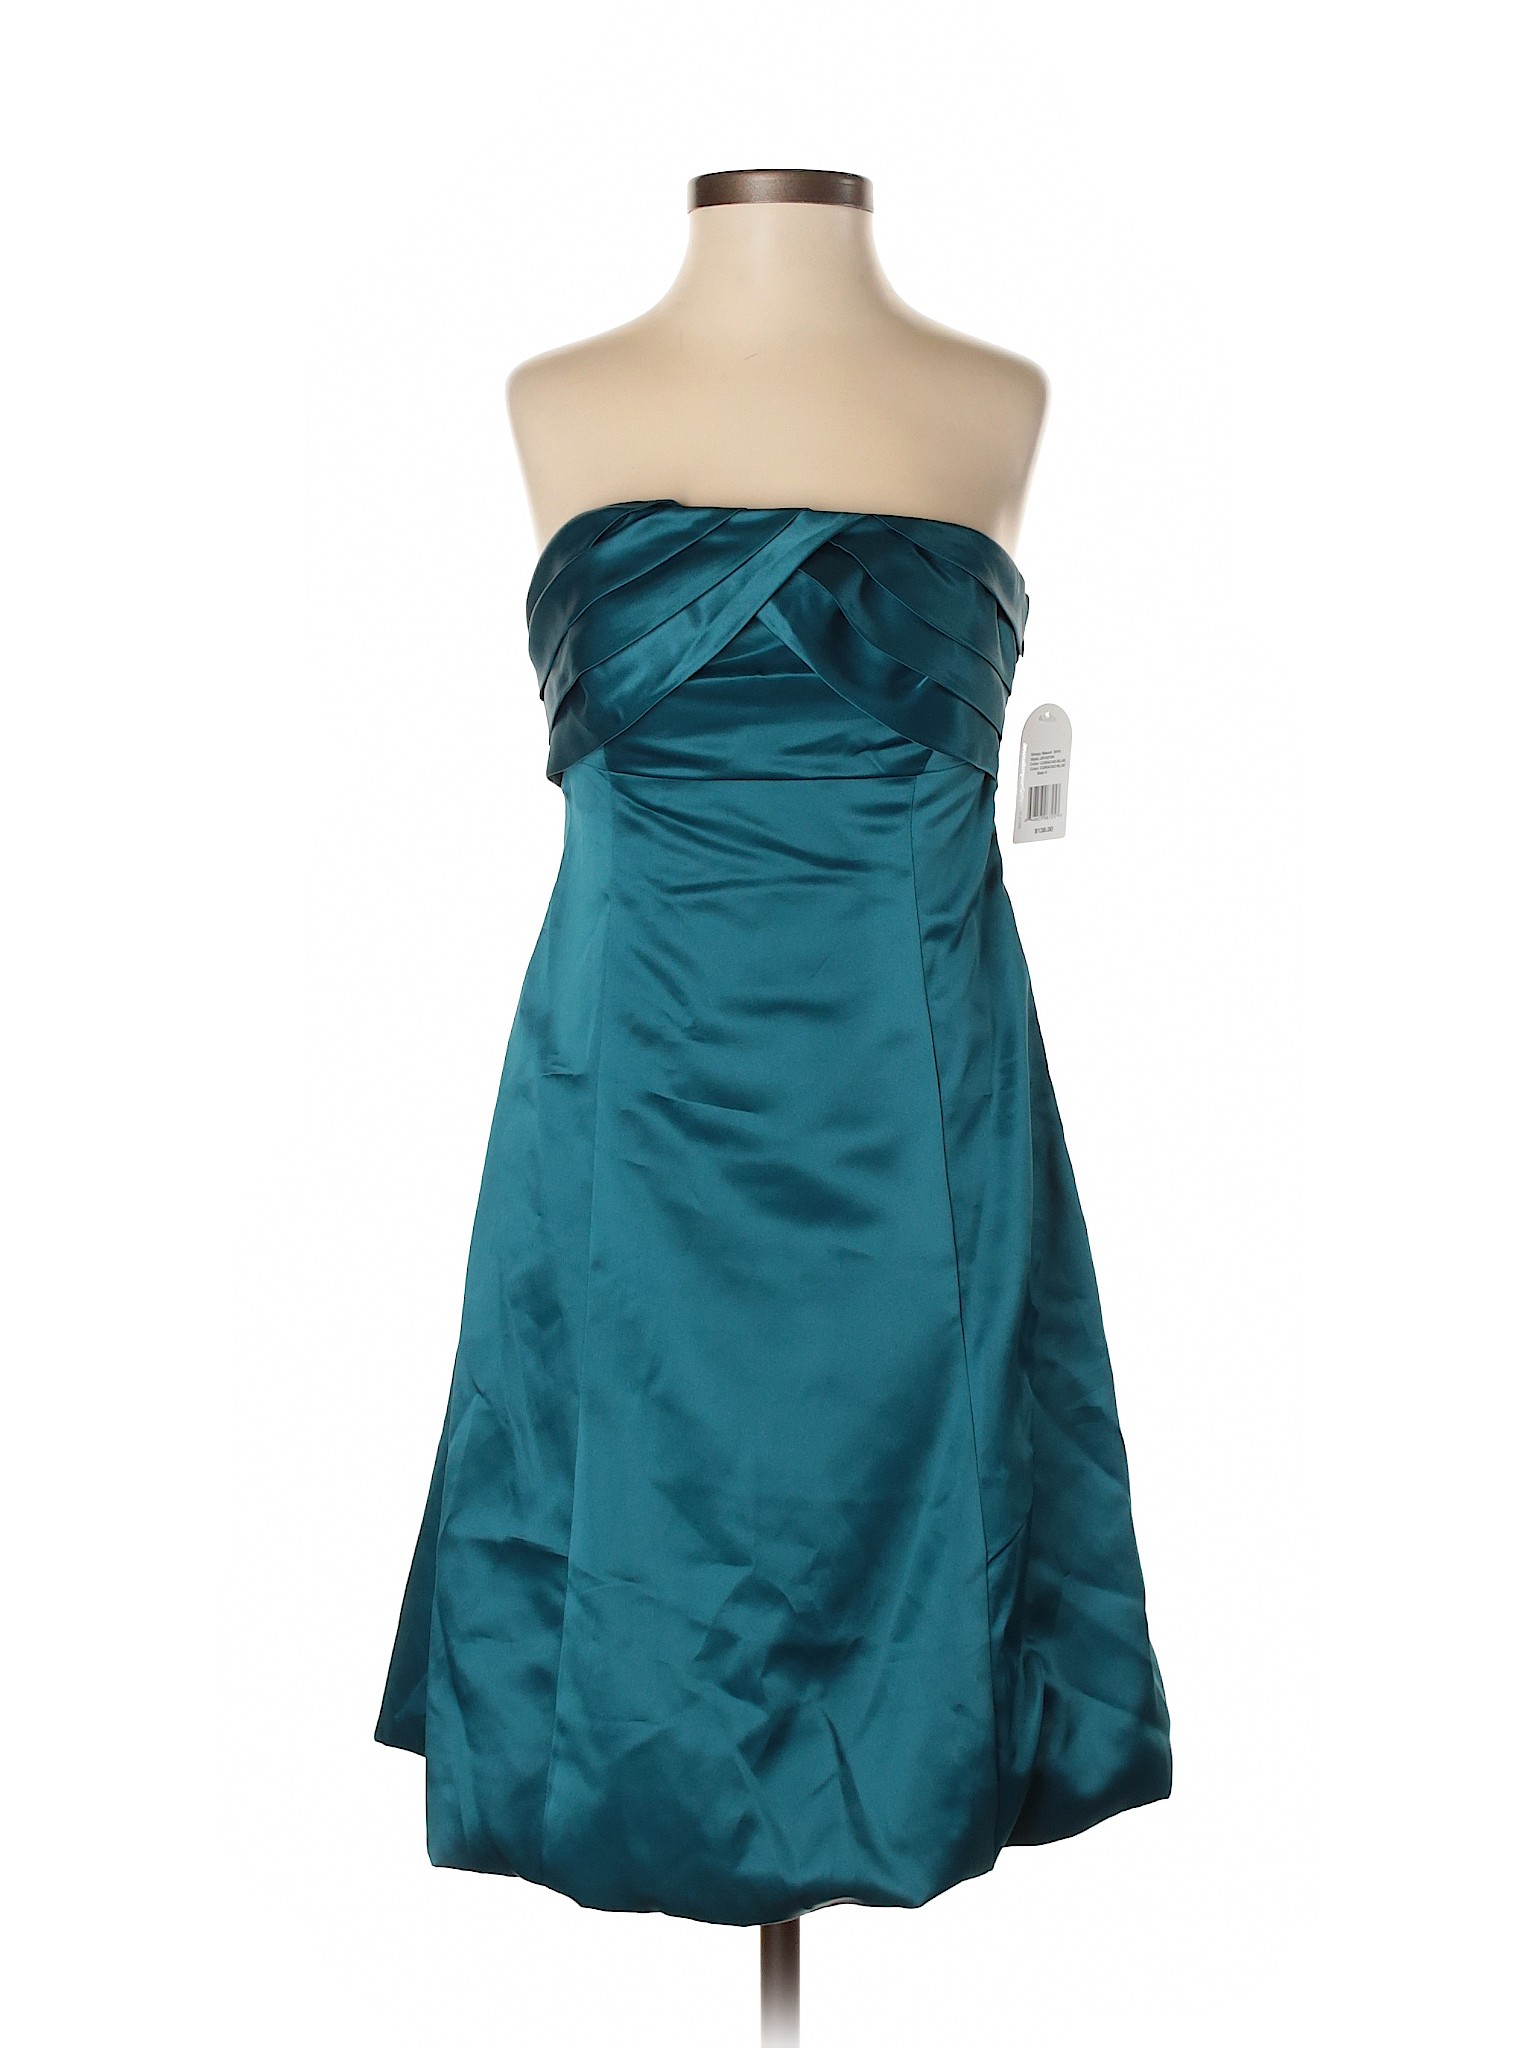 NWT Jessica Simpson Women Green Cocktail Dress 4 | eBay